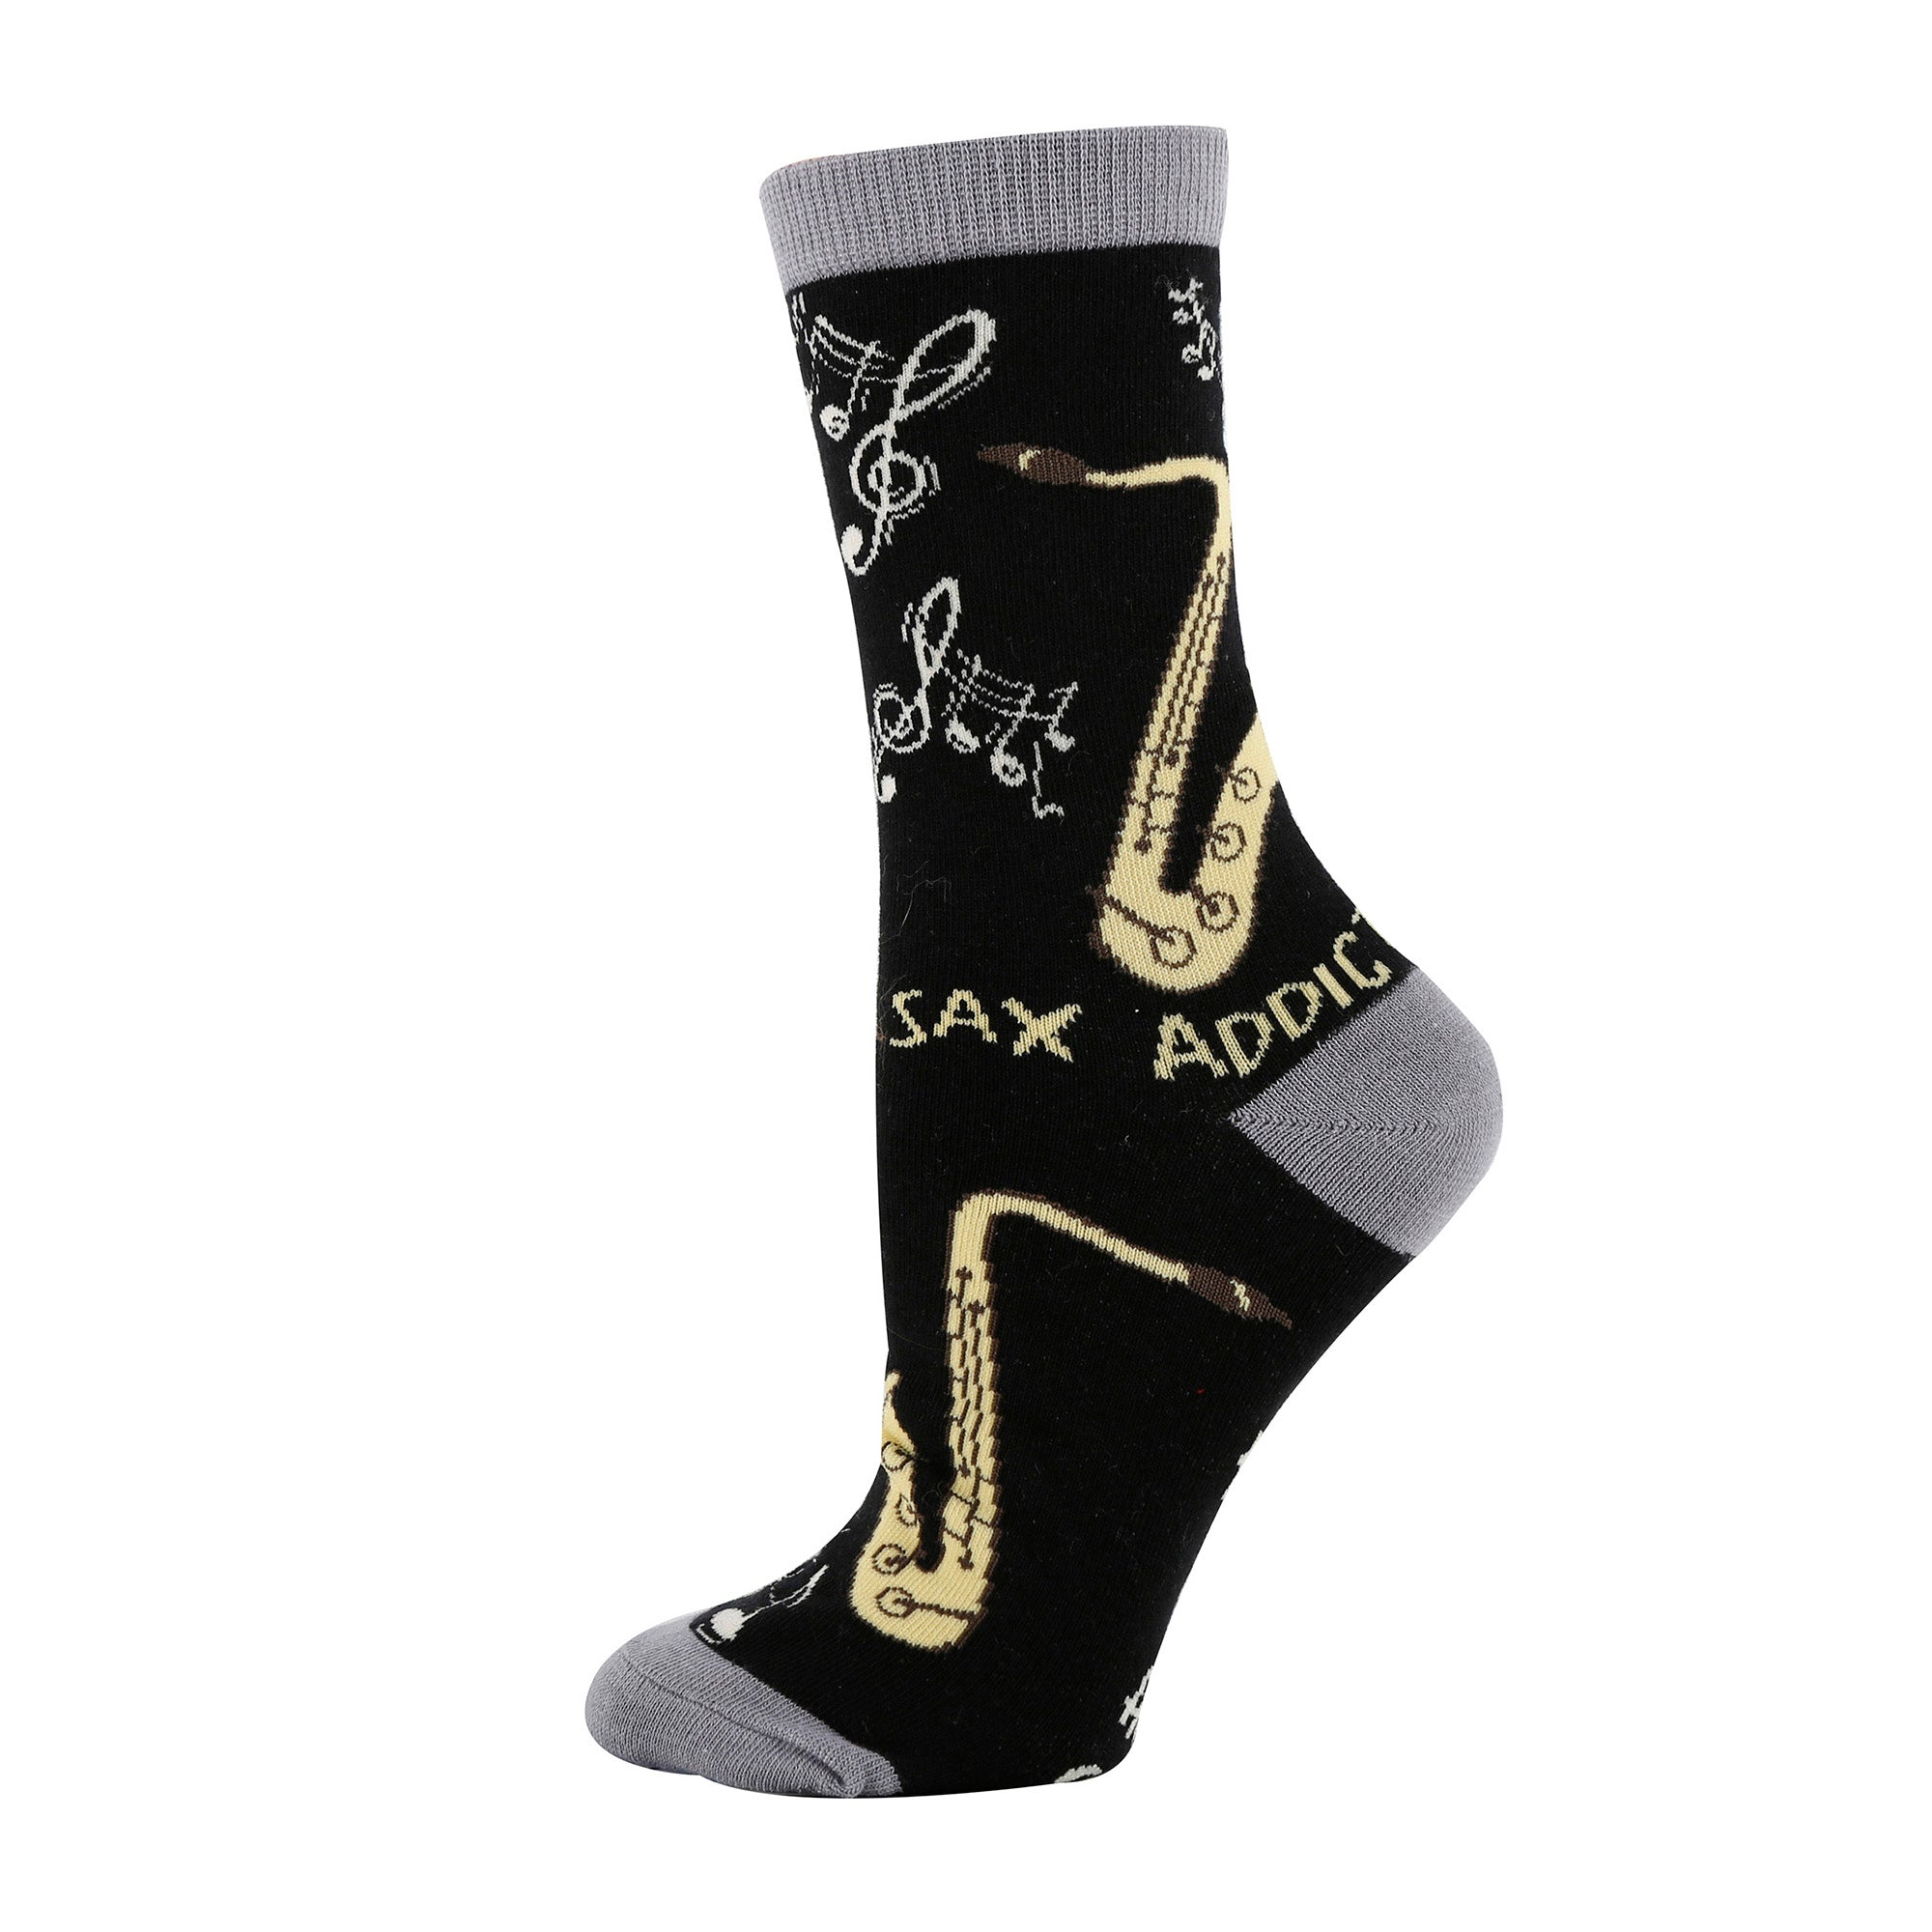 Sax Addict Socks-3